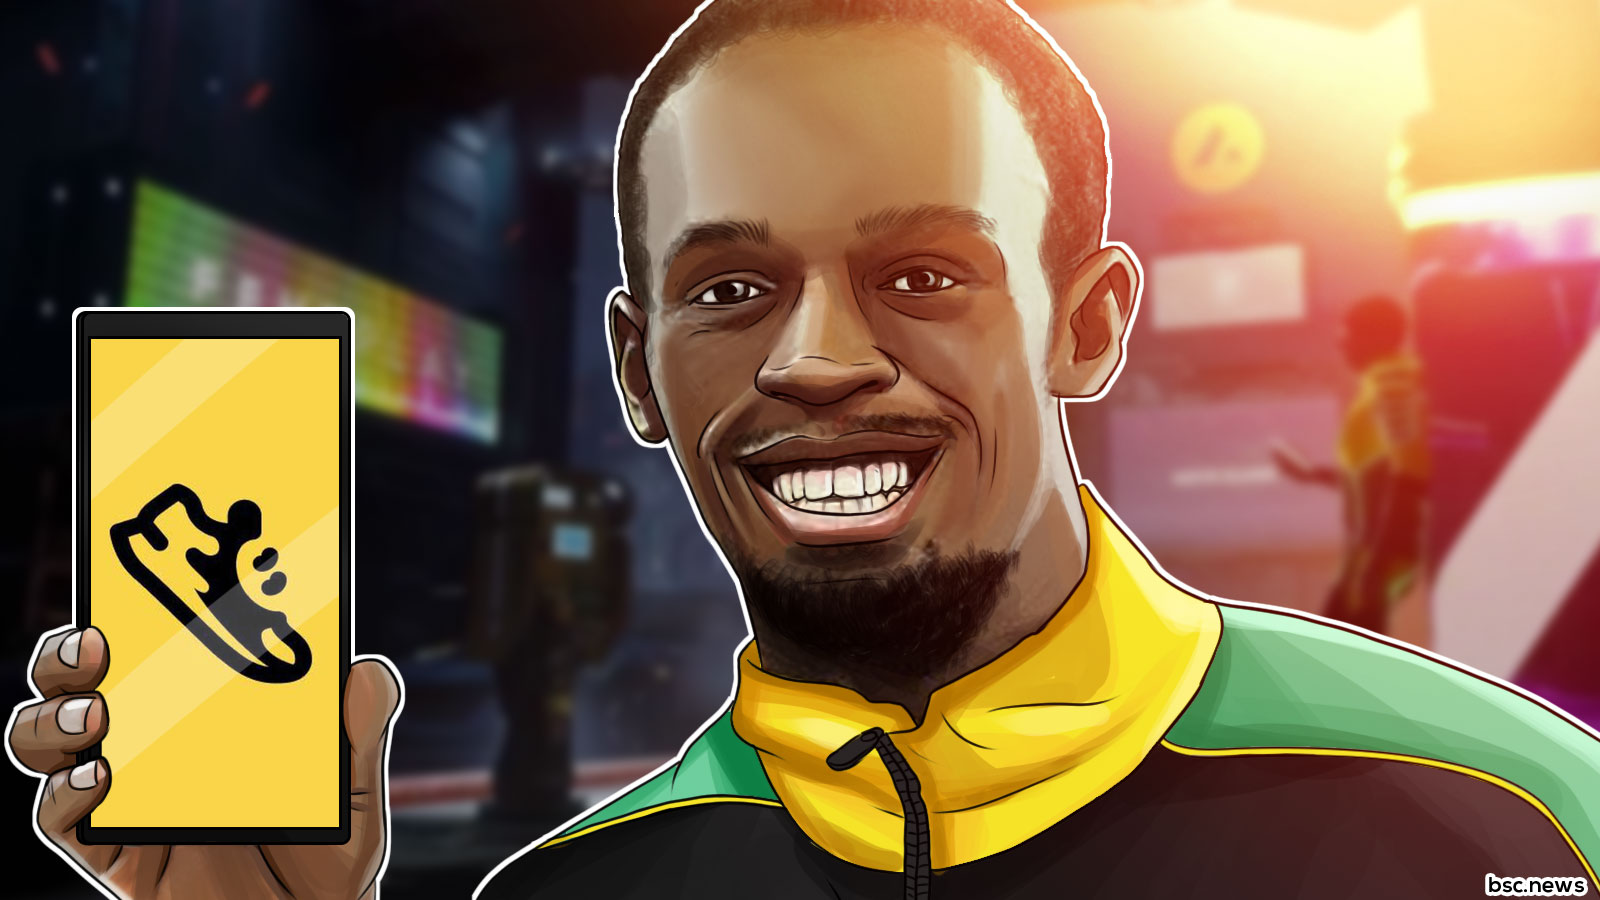 Step App Partners with Usain Bolt, Seeks 10M Users